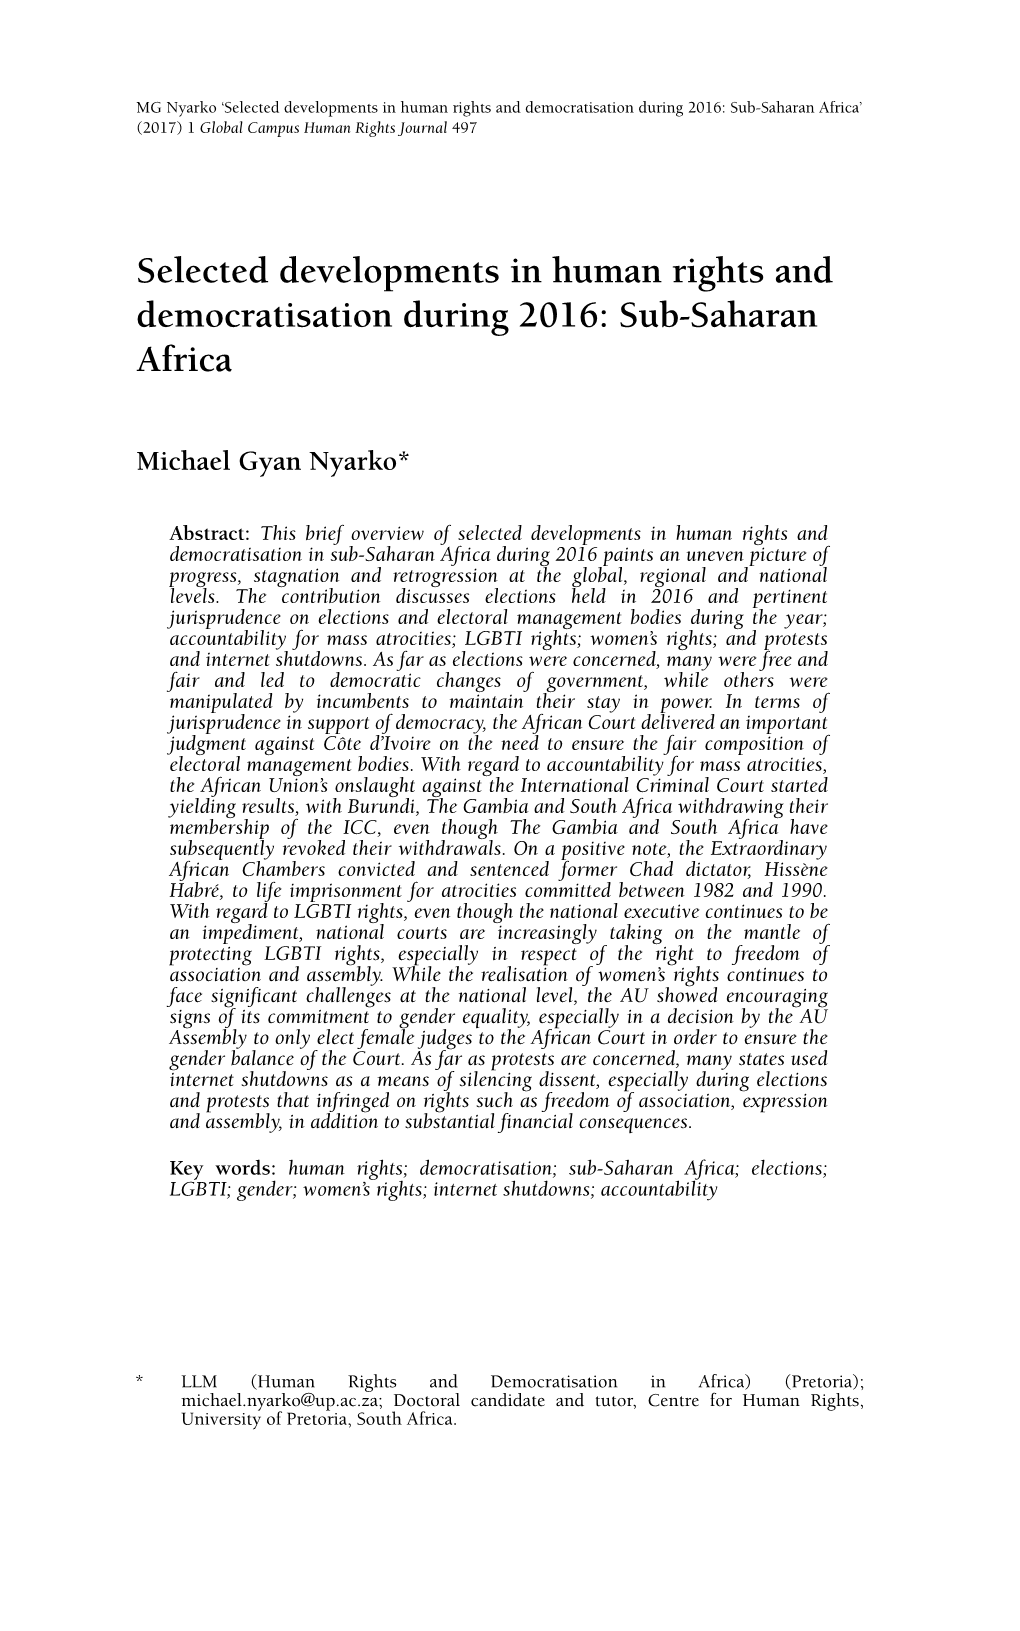 Sub-Saharan Africa’ (2017) 1 Global Campus Human Rights Journal 497